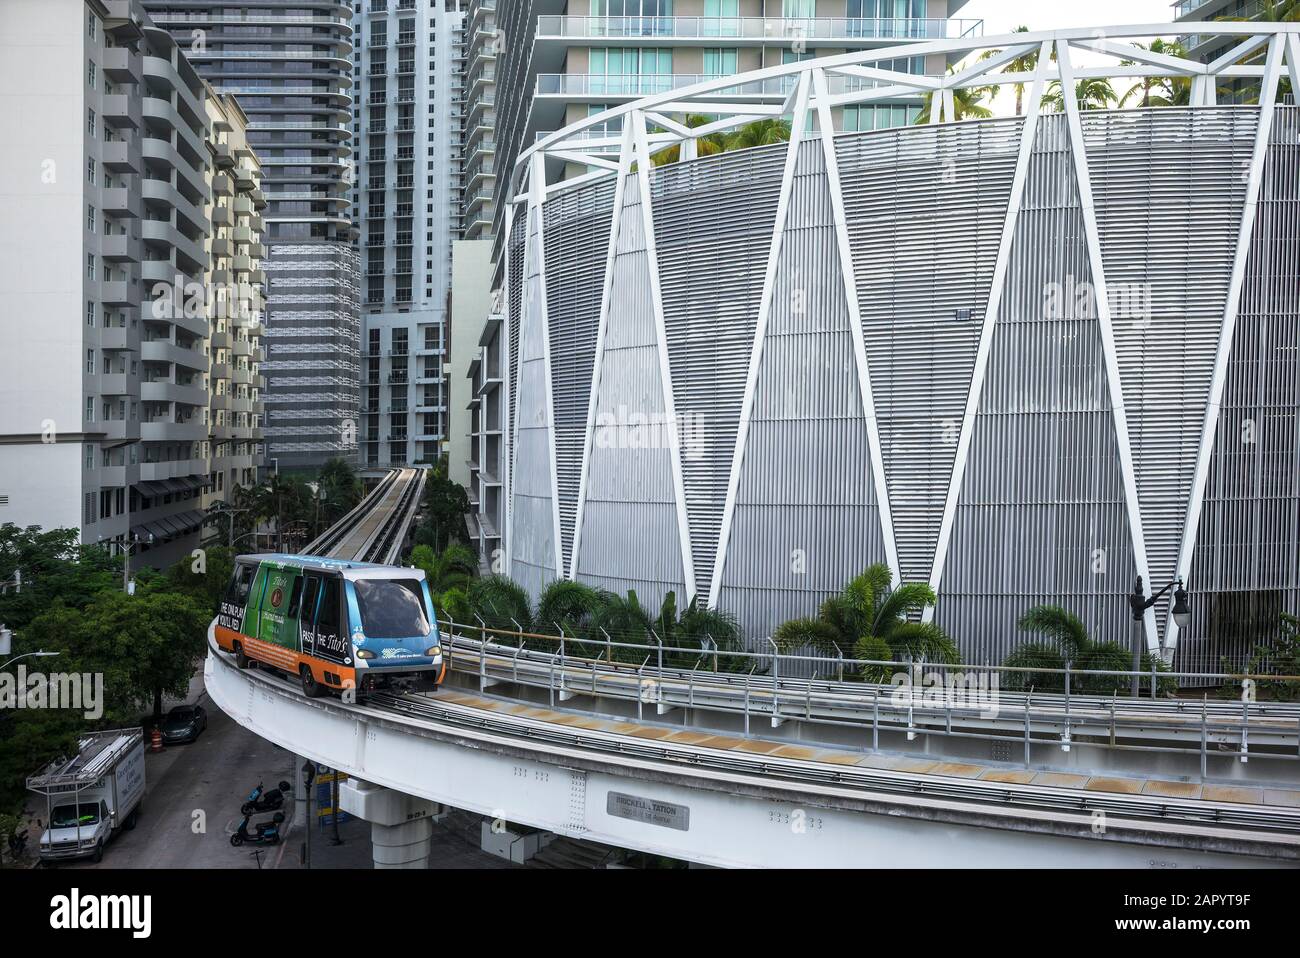 People Mover Transit System. Miami. Florida. USA Stock Photo